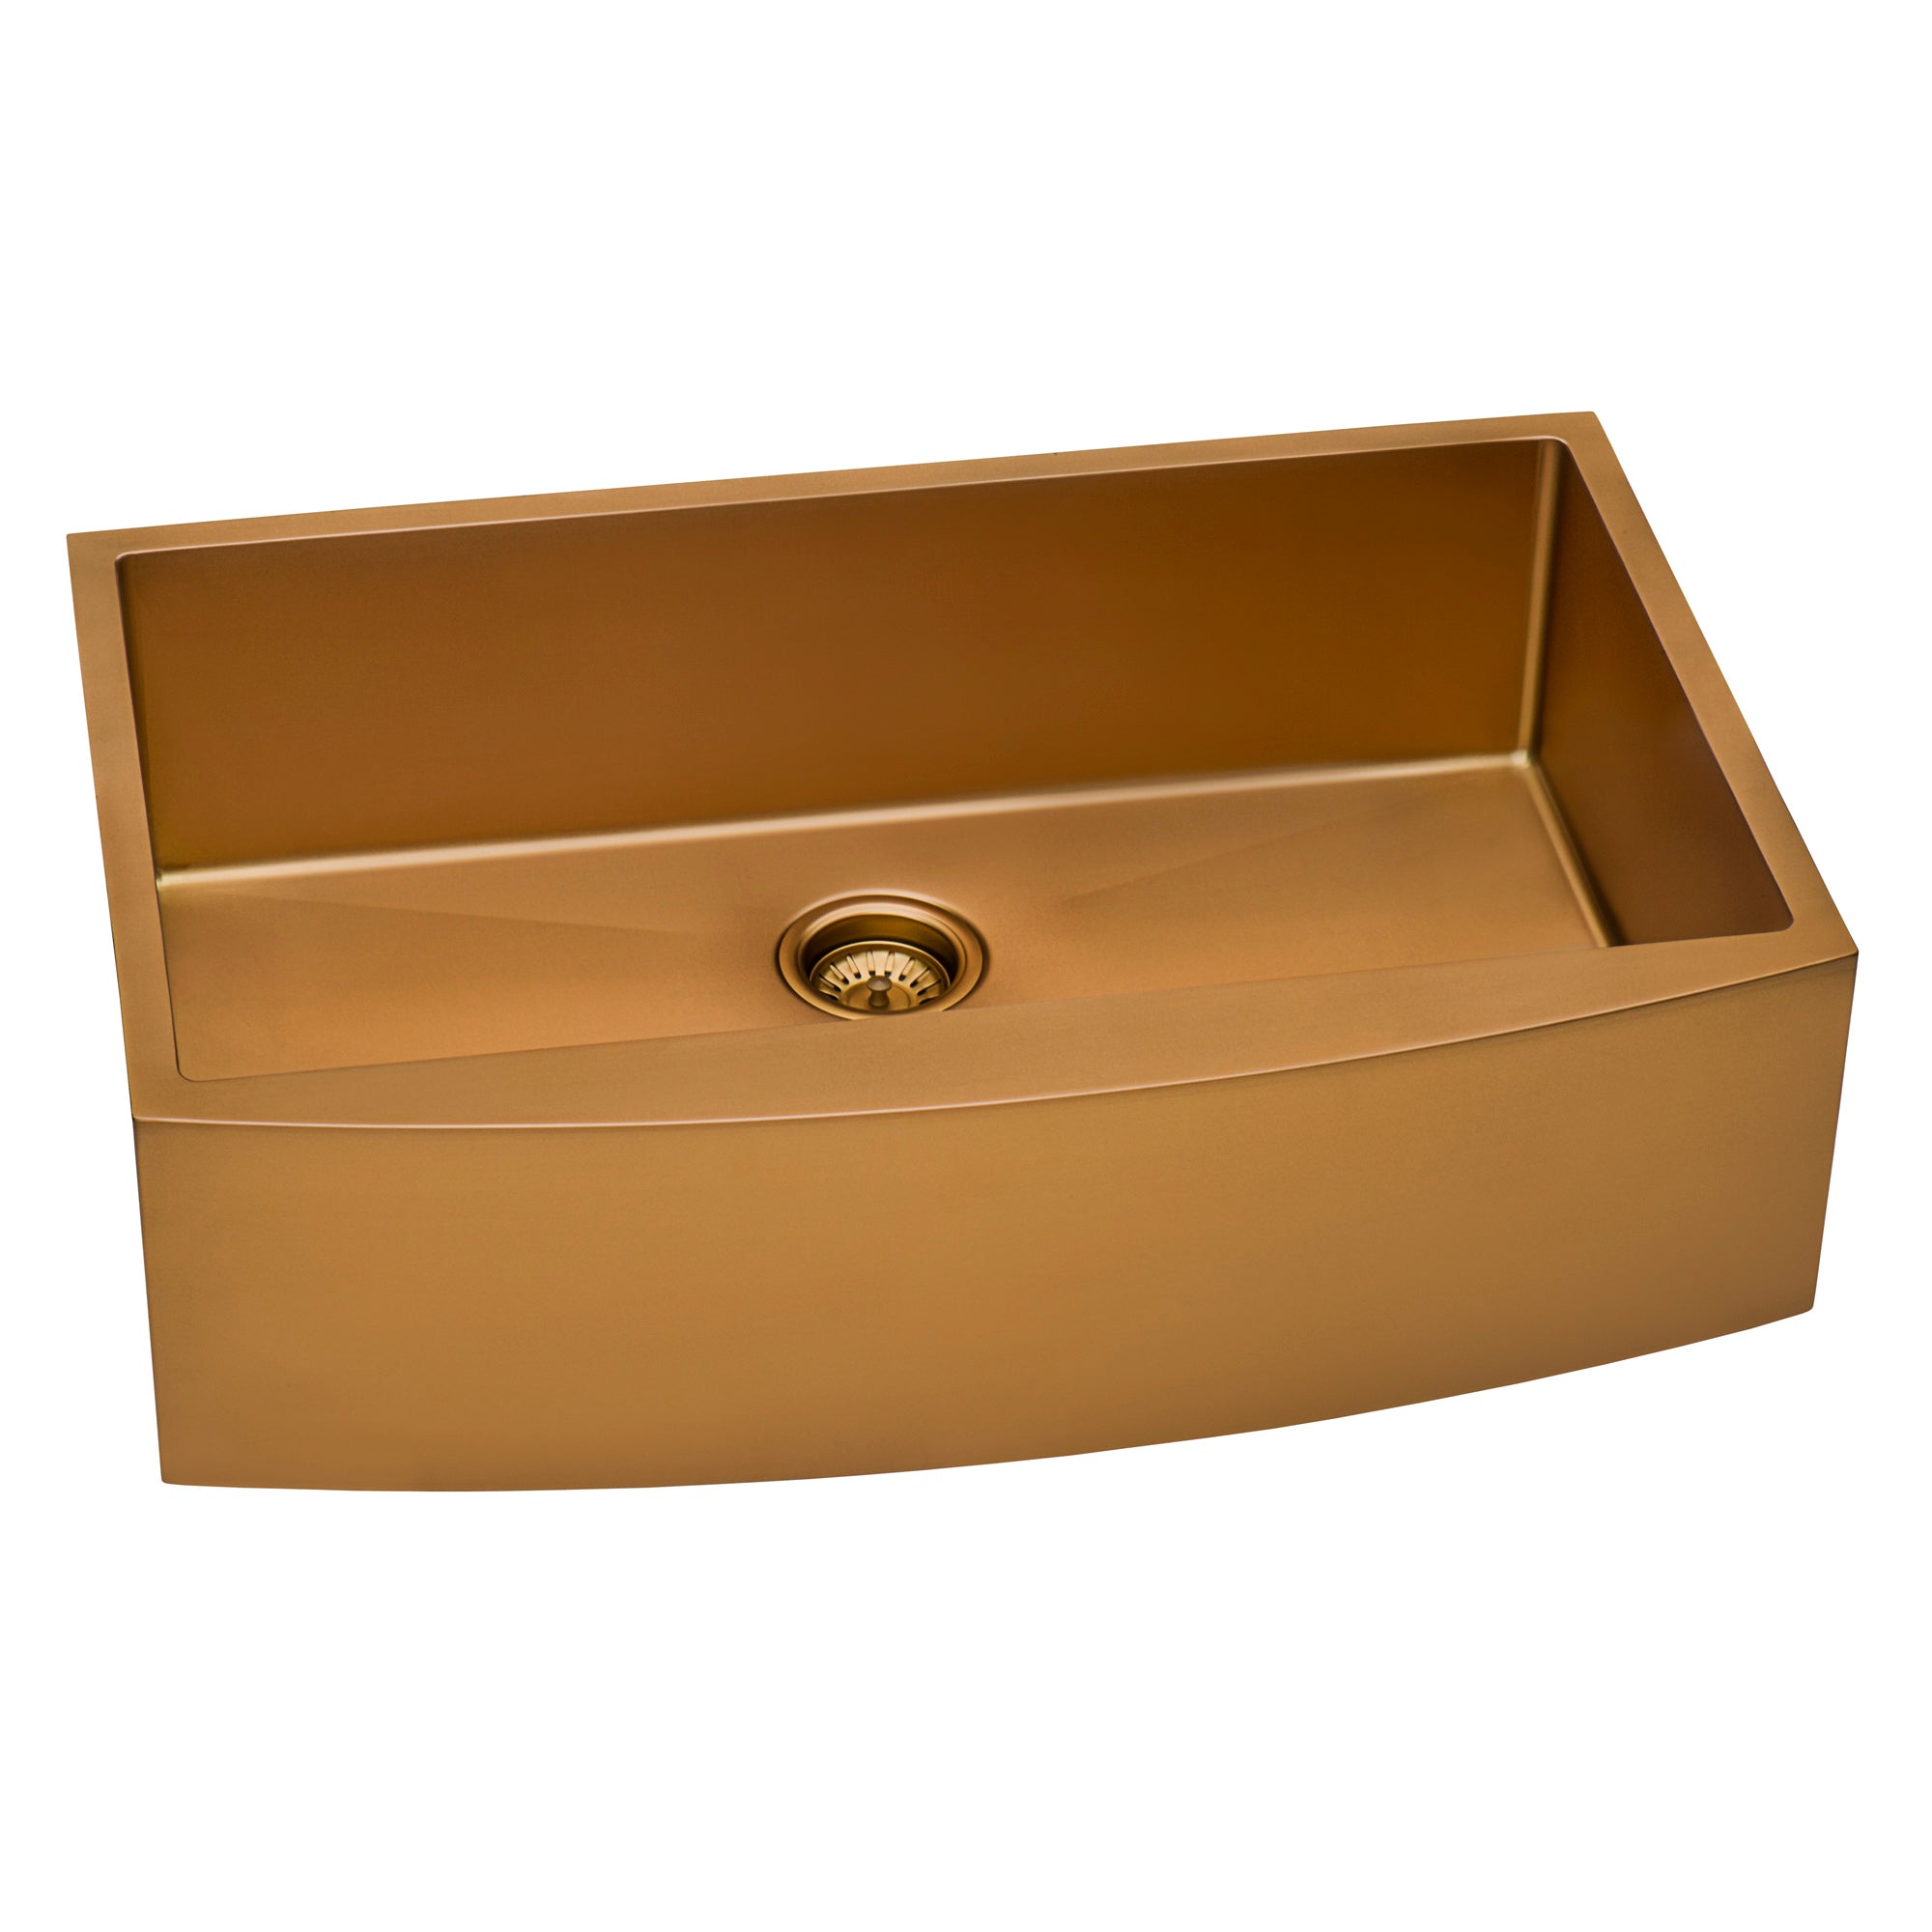 Ruvati 36" Copper Tone Matte Bronze Apron Front Stainless Steel Kitchen Sink